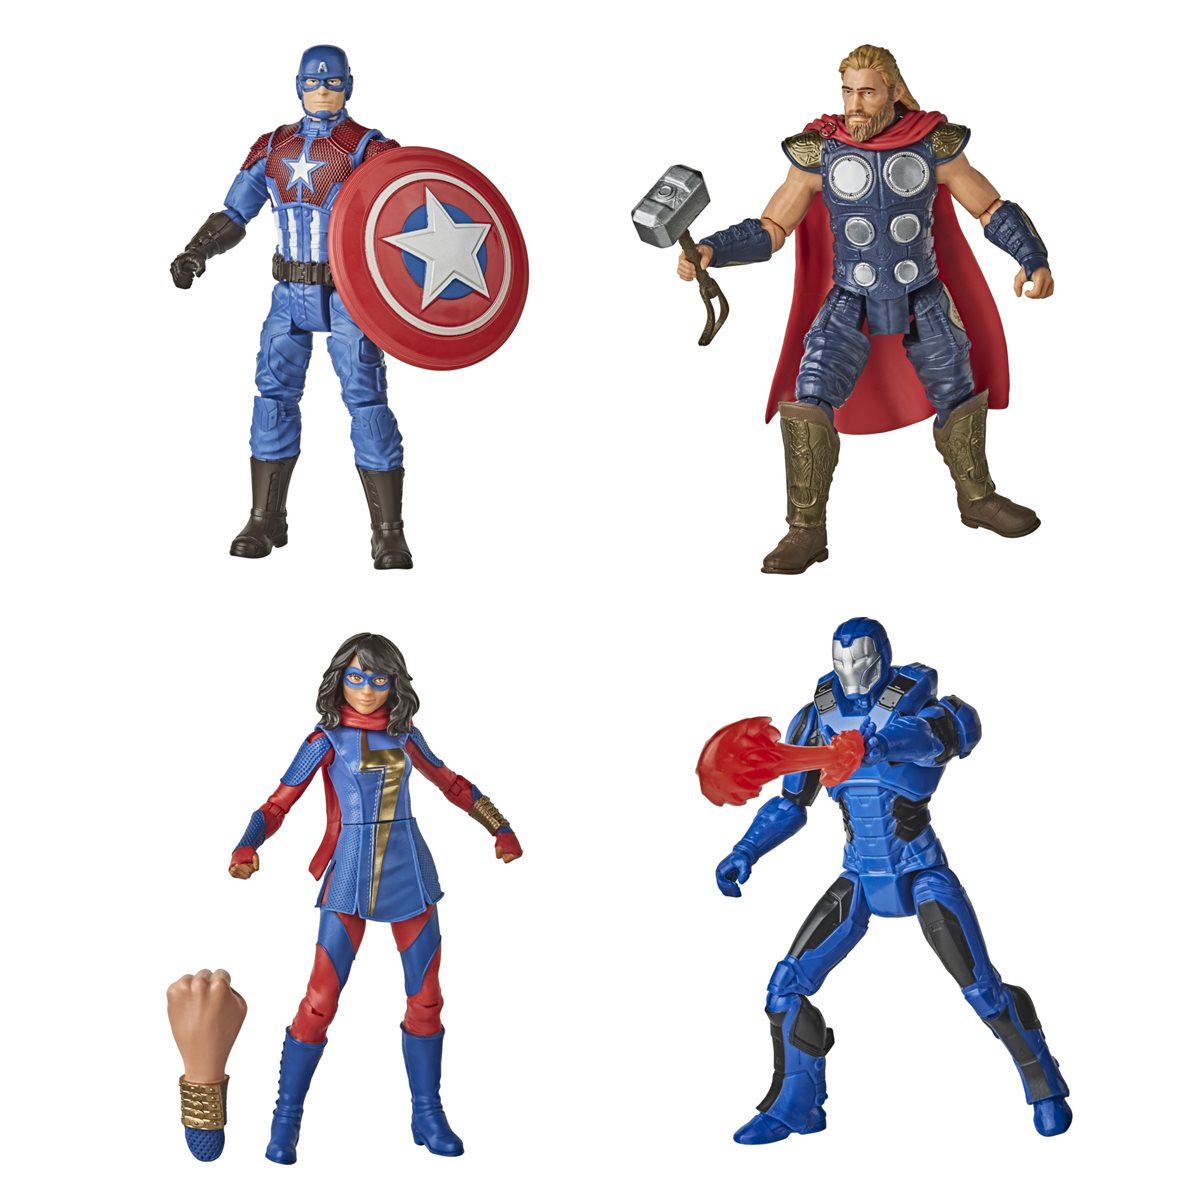 6 marvel figures